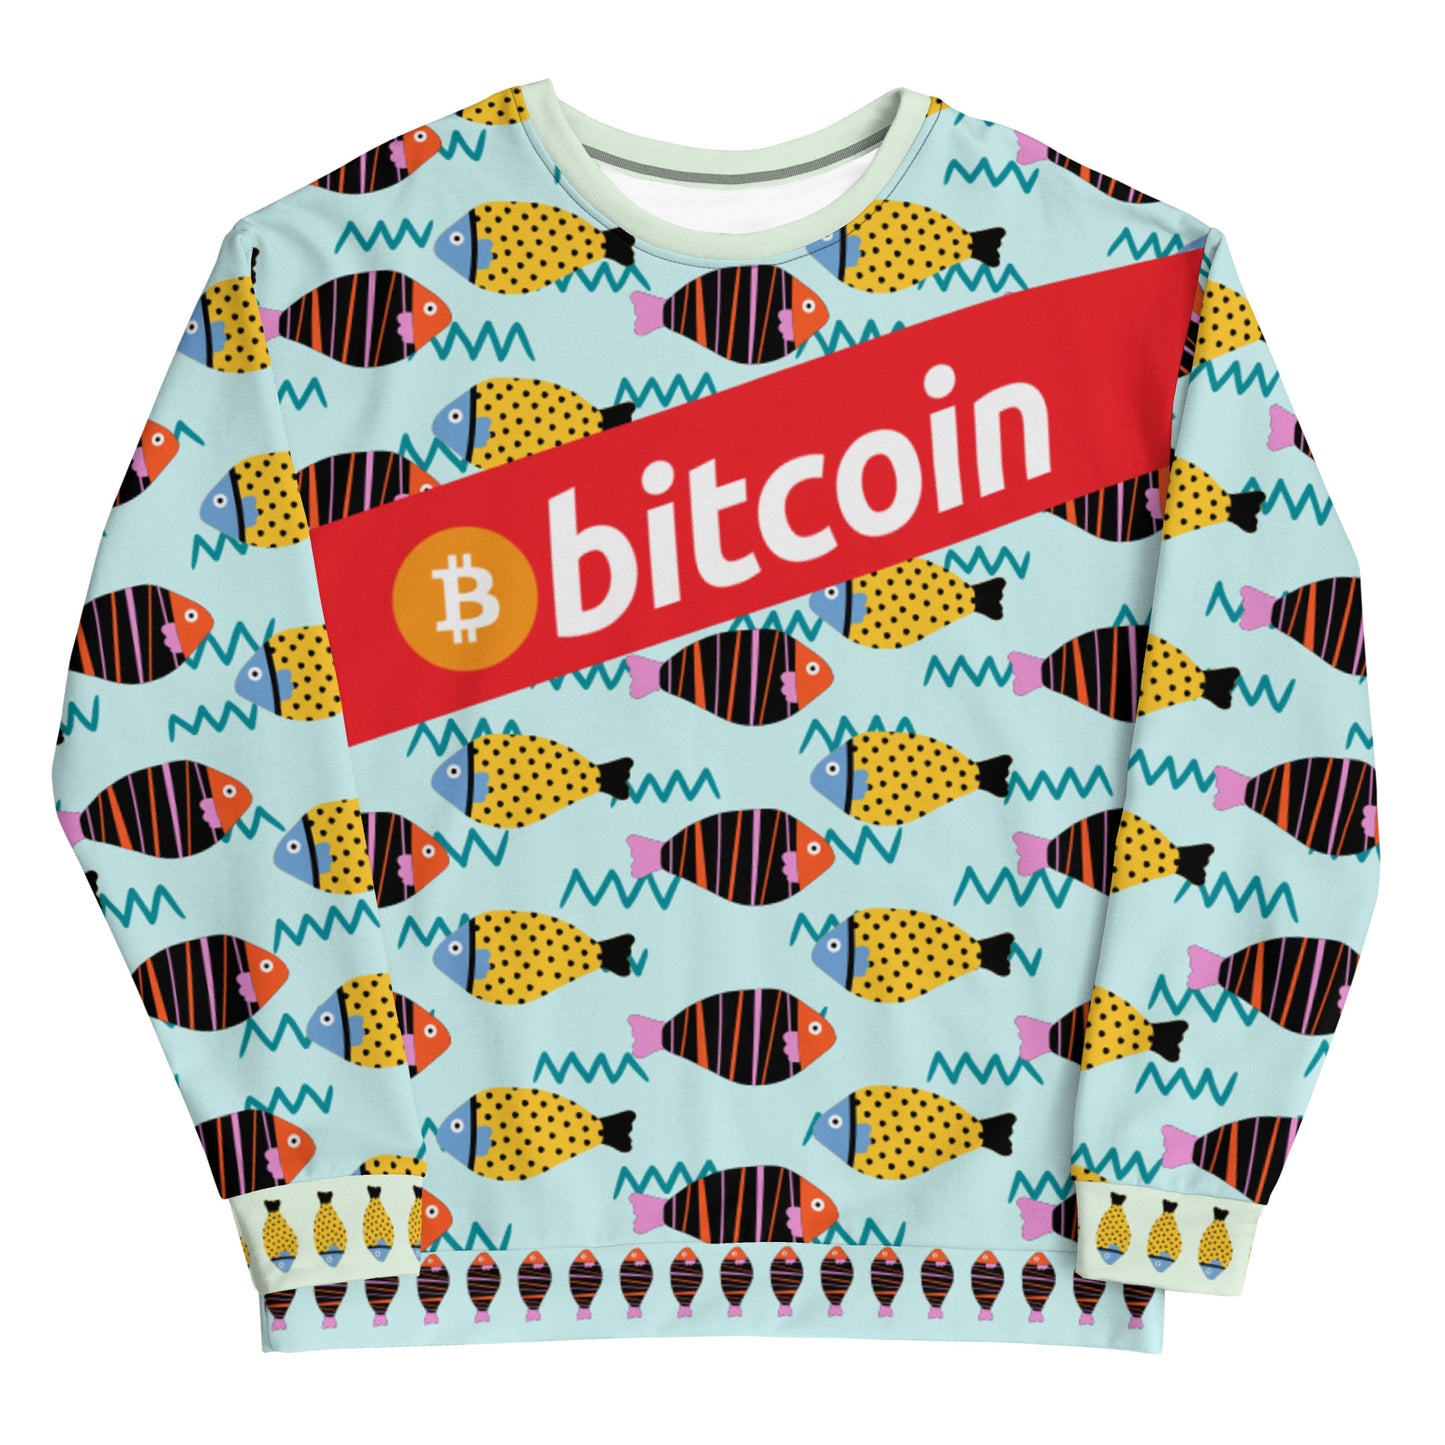 Bitcoin Fish Sweatshirt